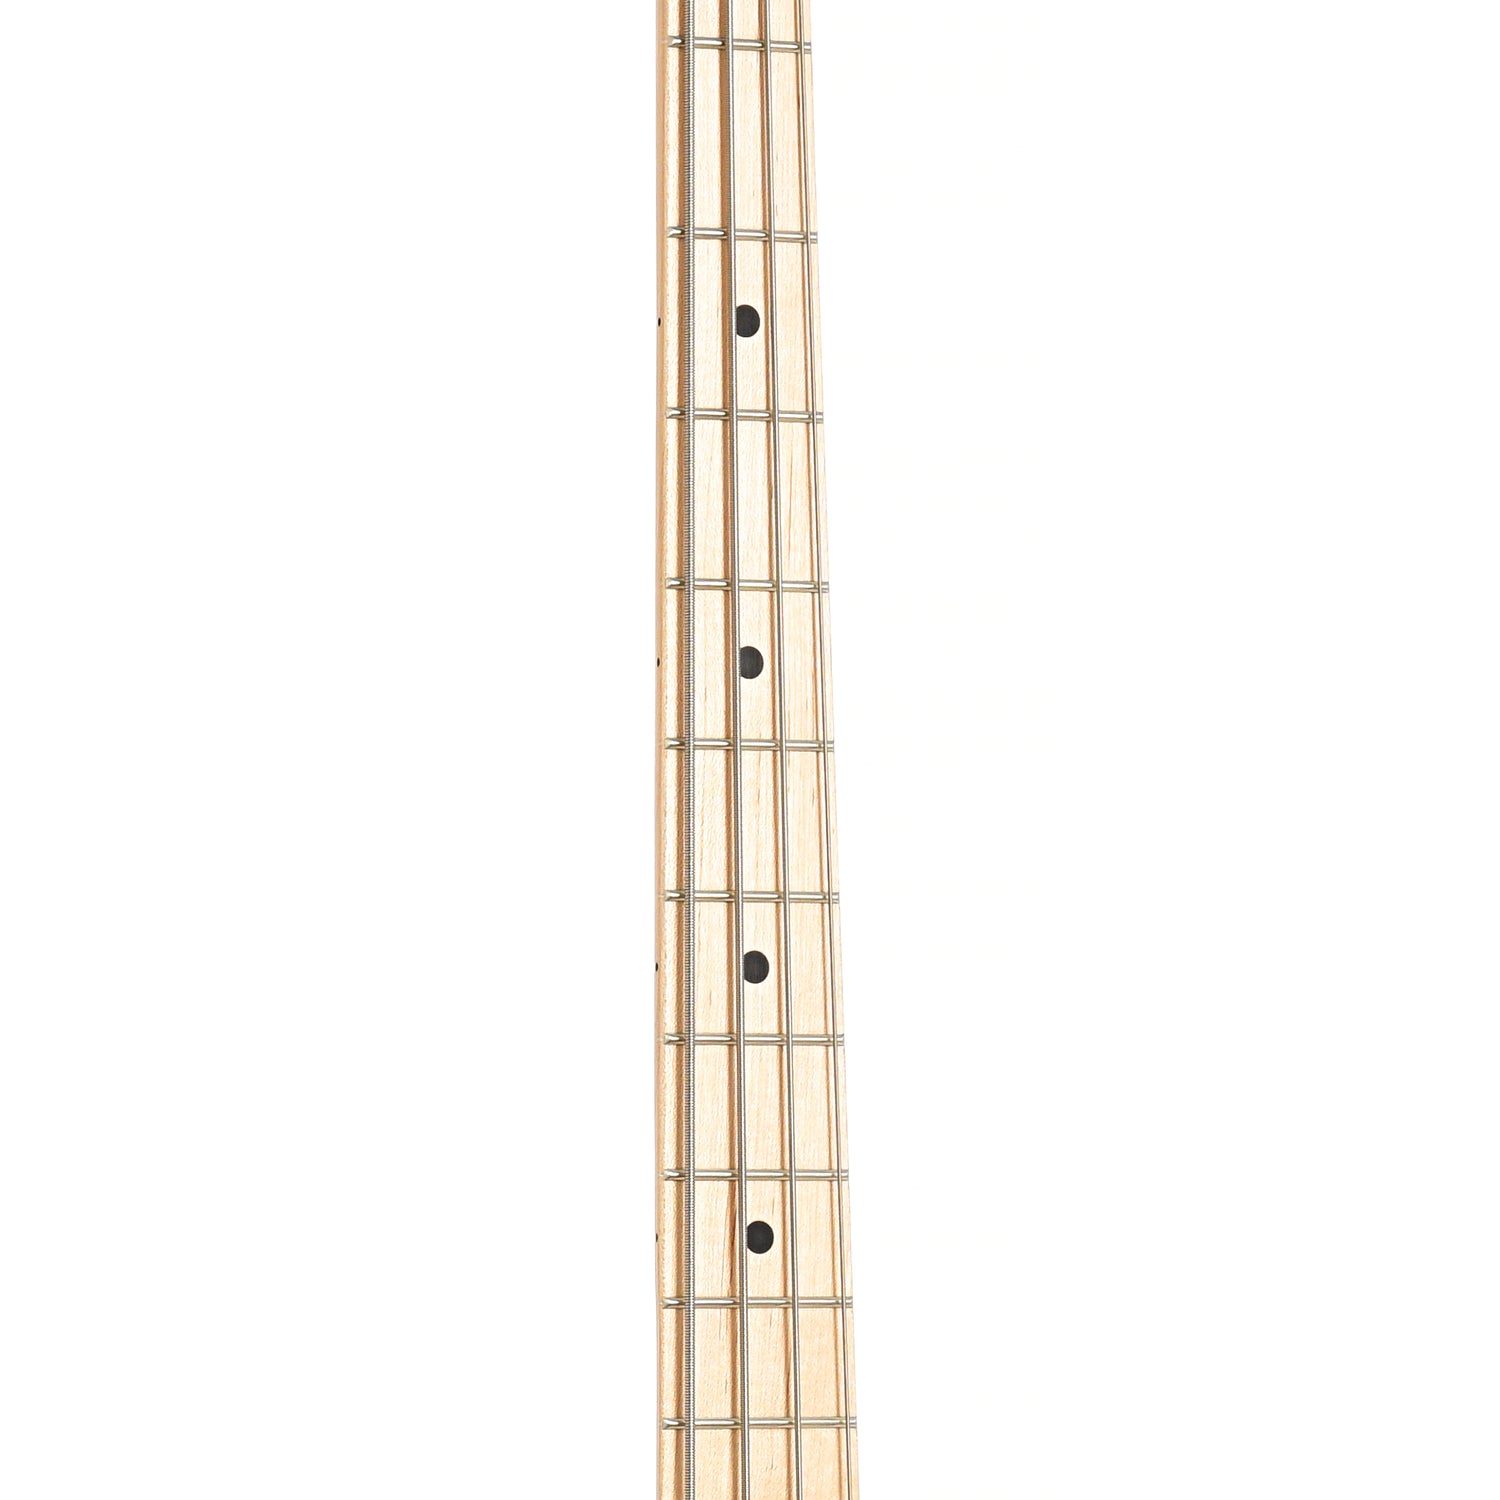 Image 6 of Sterling by Music Man StingRay 4 Bass, Vintage Sunburst Satin Finish - SKU# RAY4-VSBS : Product Type Solid Body Bass Guitars : Elderly Instruments